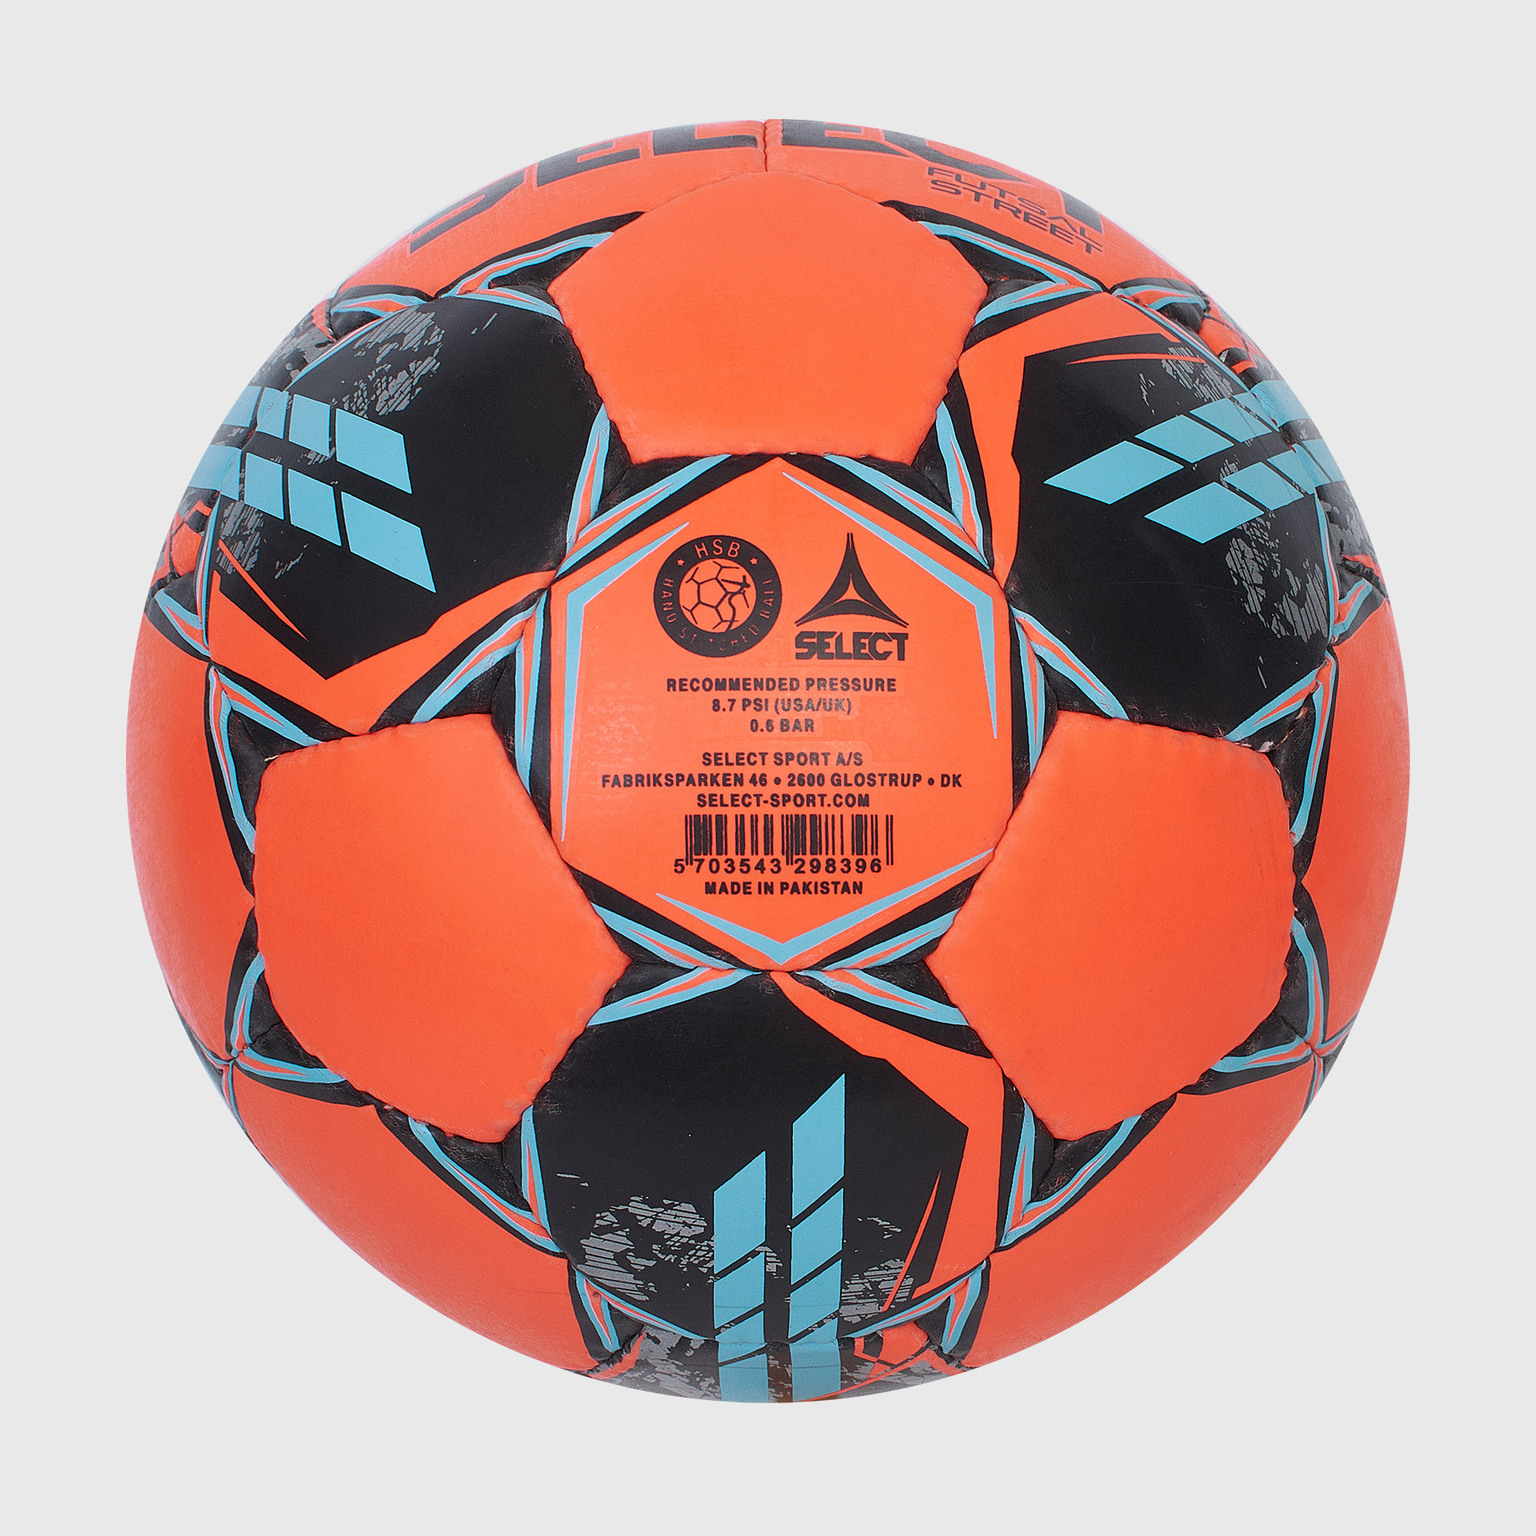 Футзальный мяч Select Futsal Street 1064260662